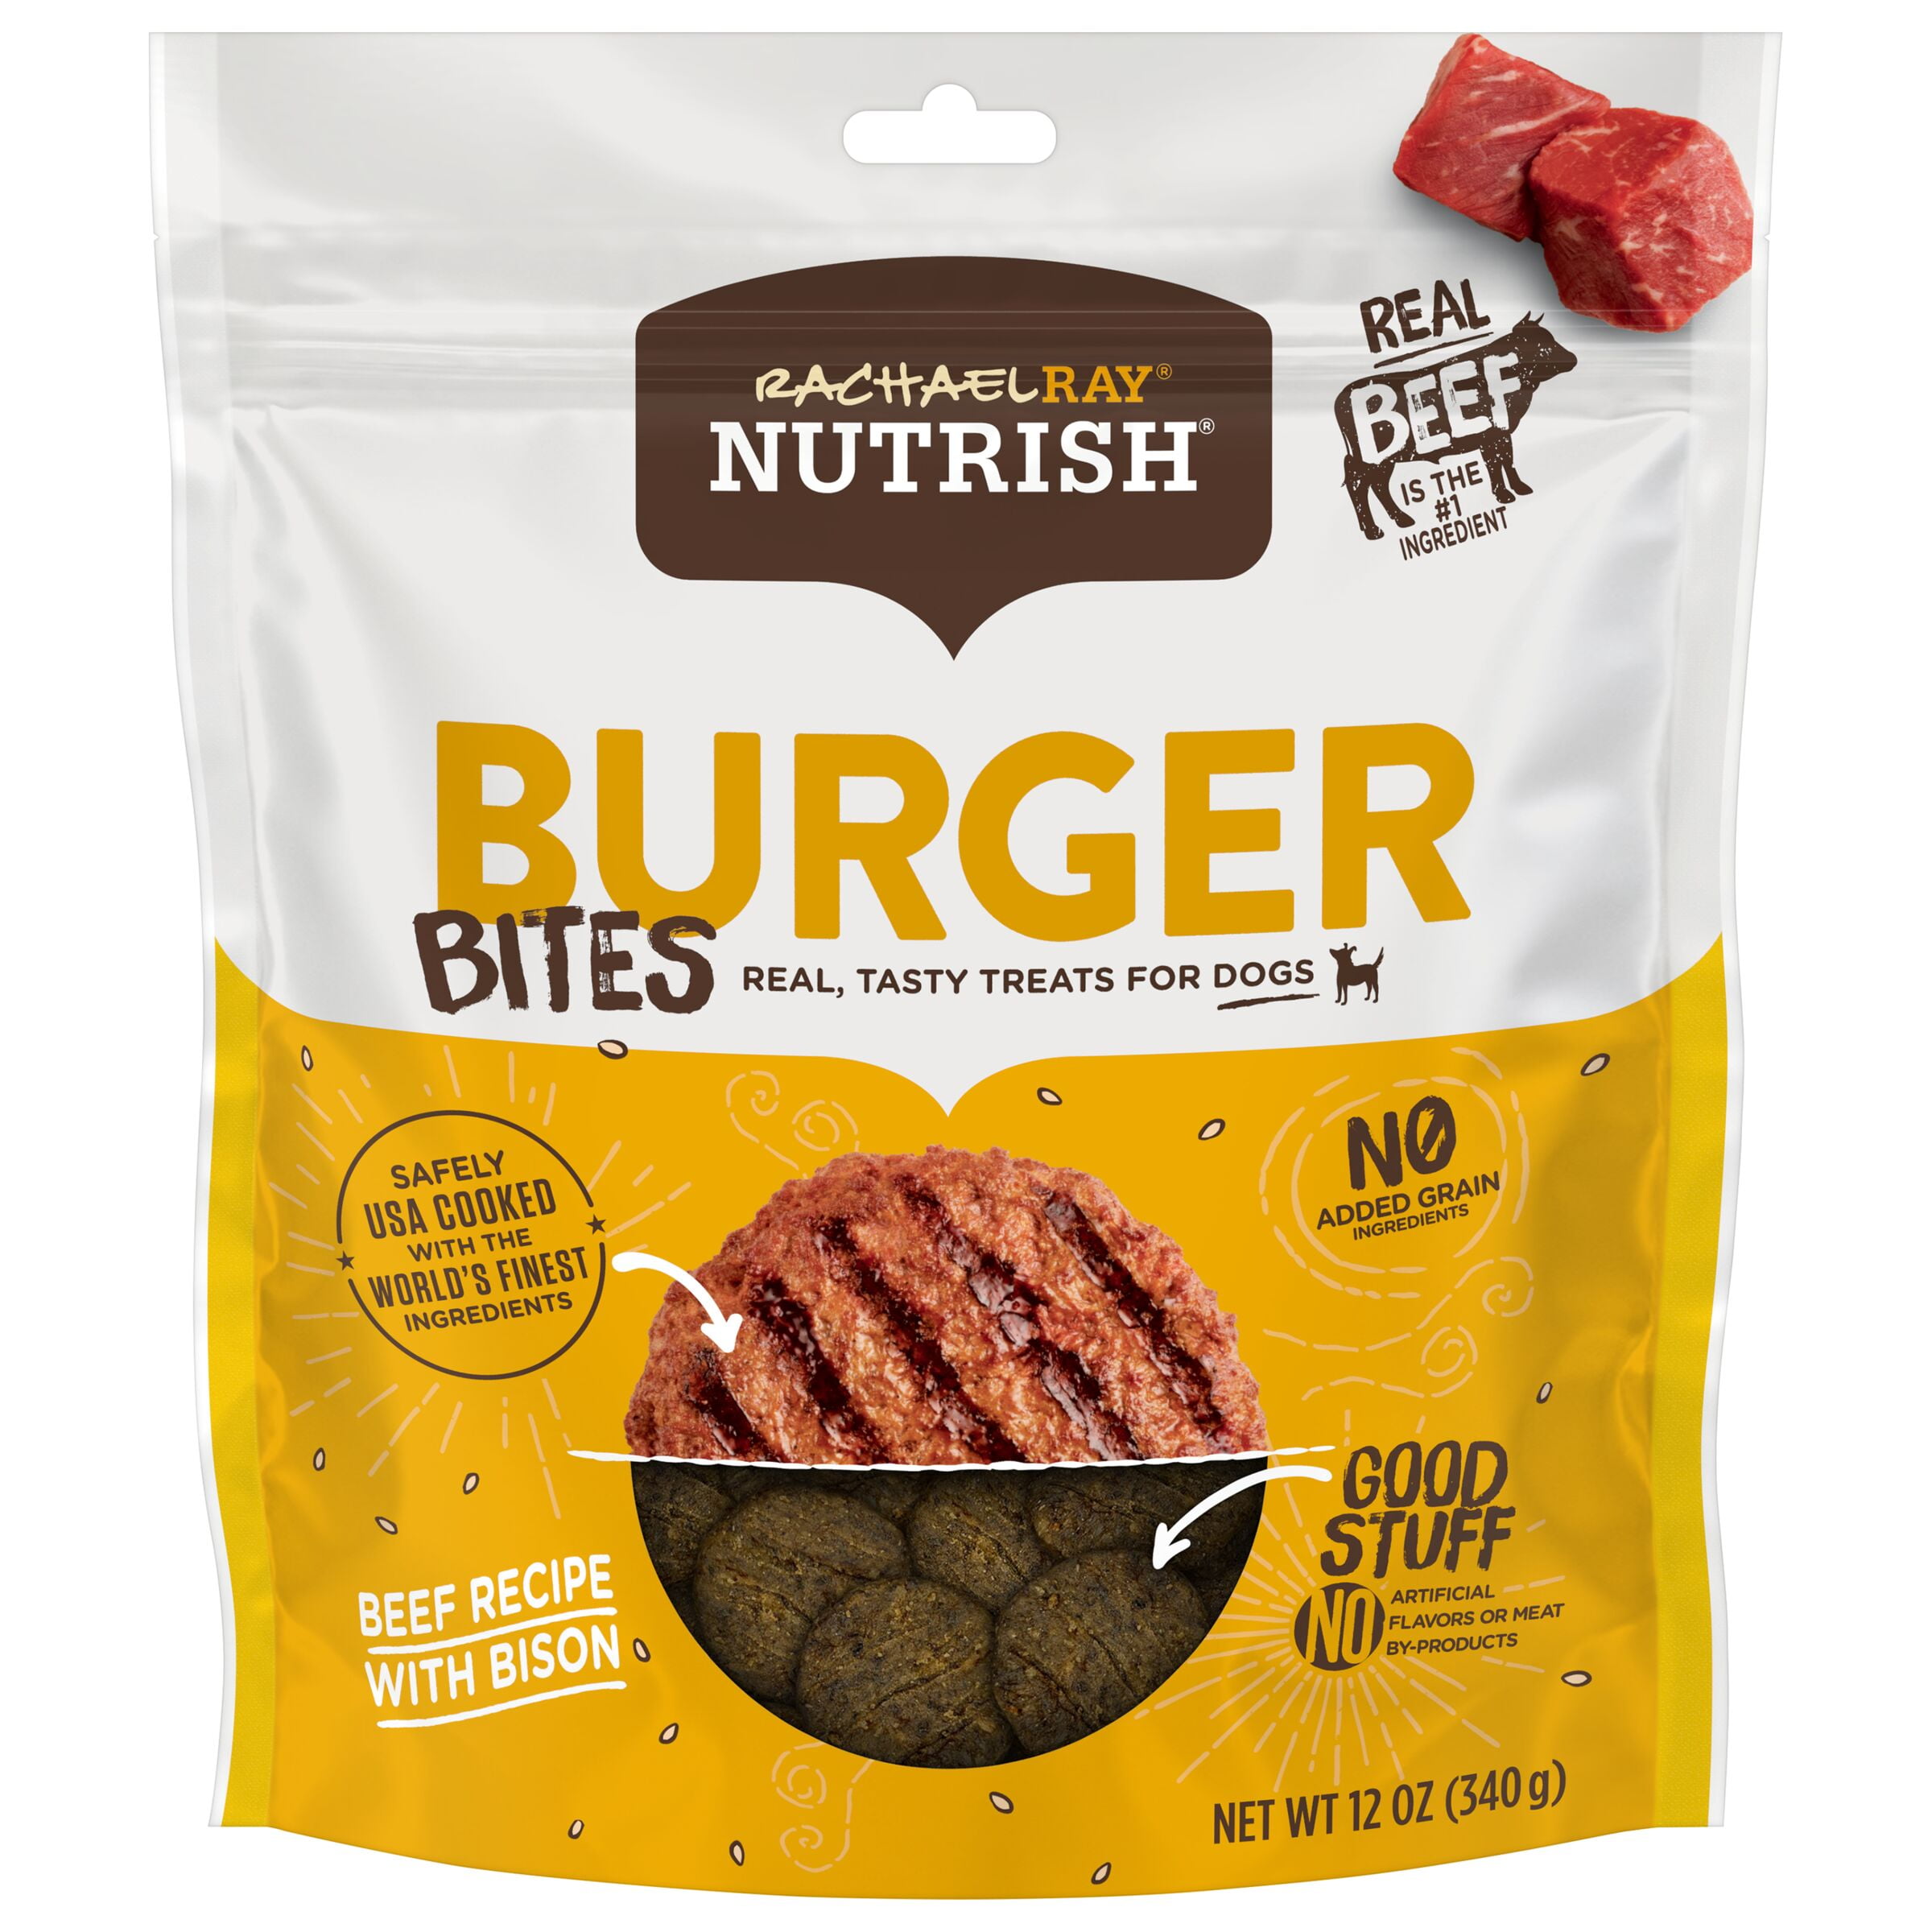 Rachael Ray Nutrish Burger Bites Beef Recipe With Bison Dog Treats, 12 oz. Bag